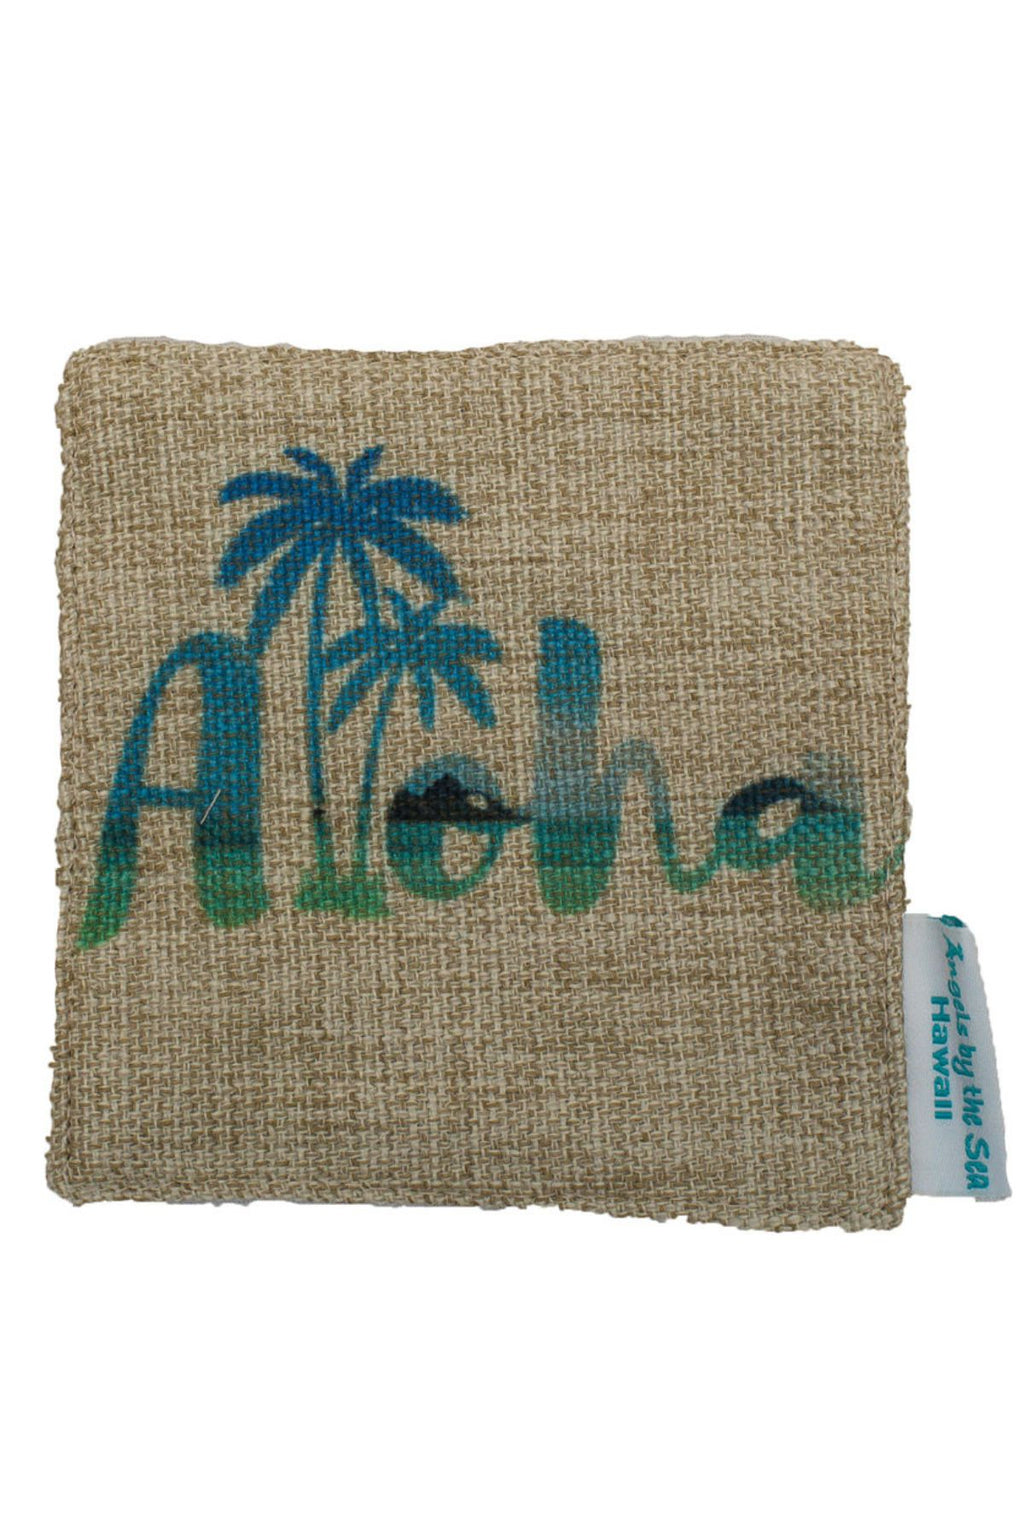 Hemp Coaster with Aloha